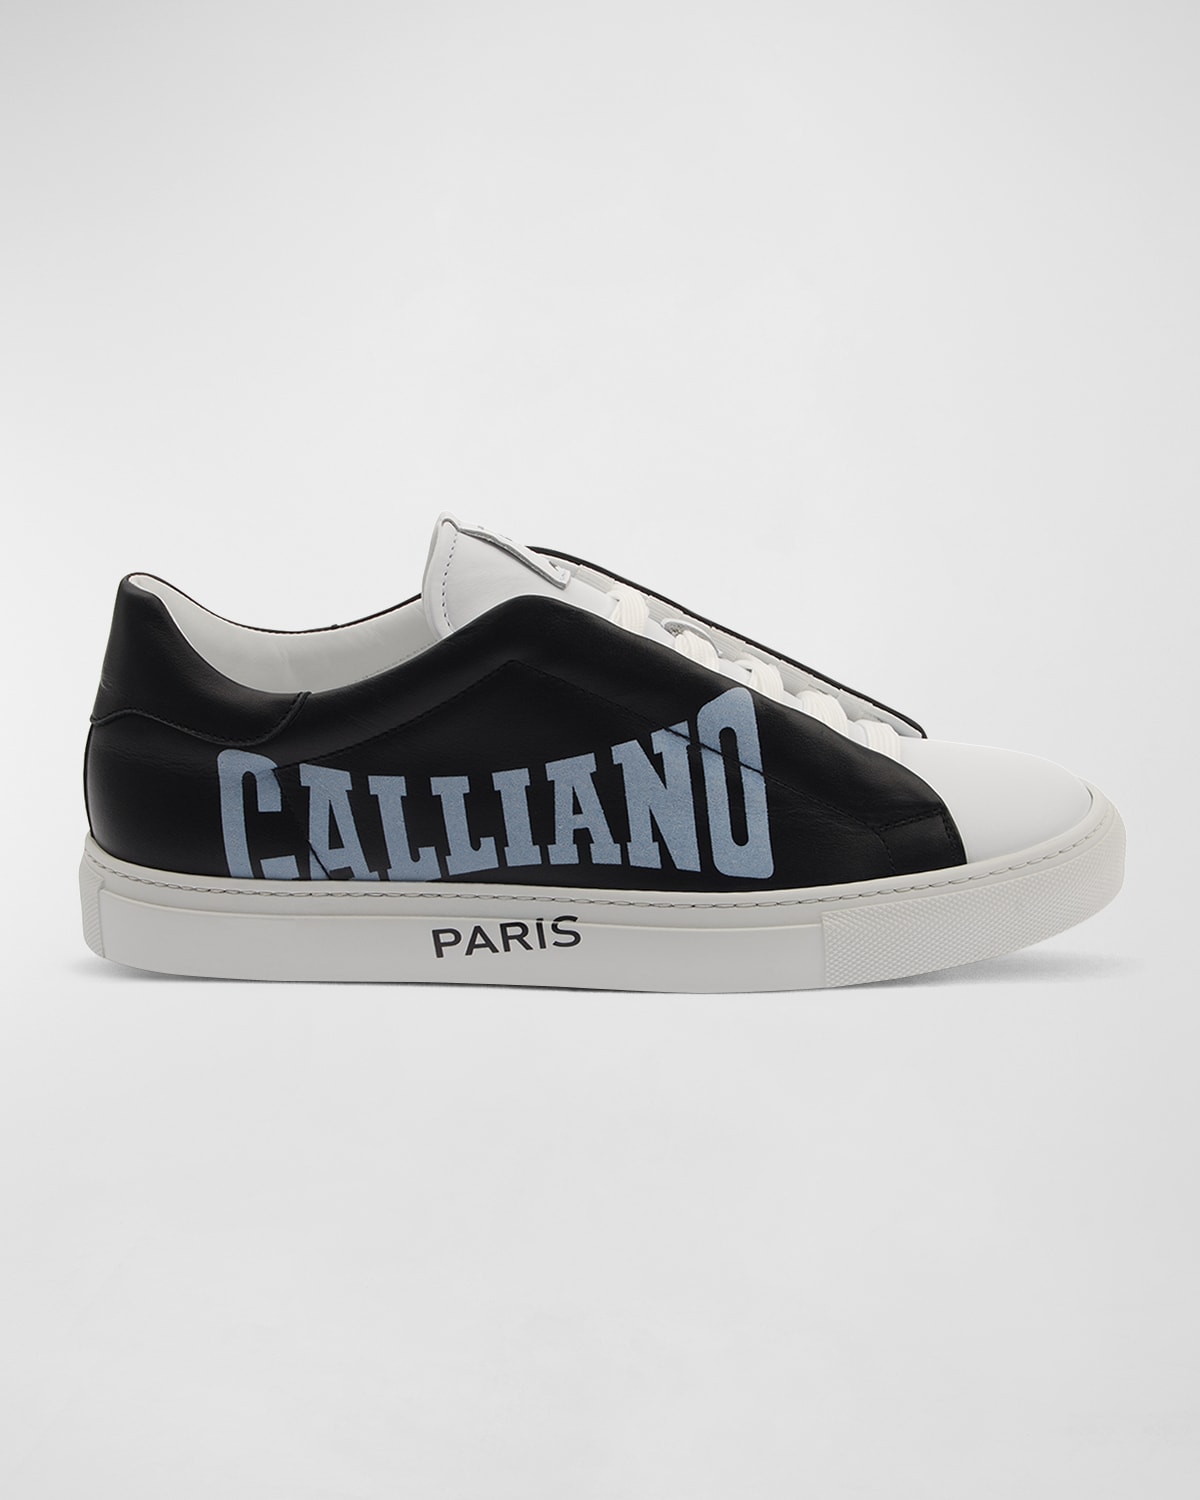 John Galliano Paris Men's Typographic Logo Hidden-Lace Low-Top Sneakers, White/Black